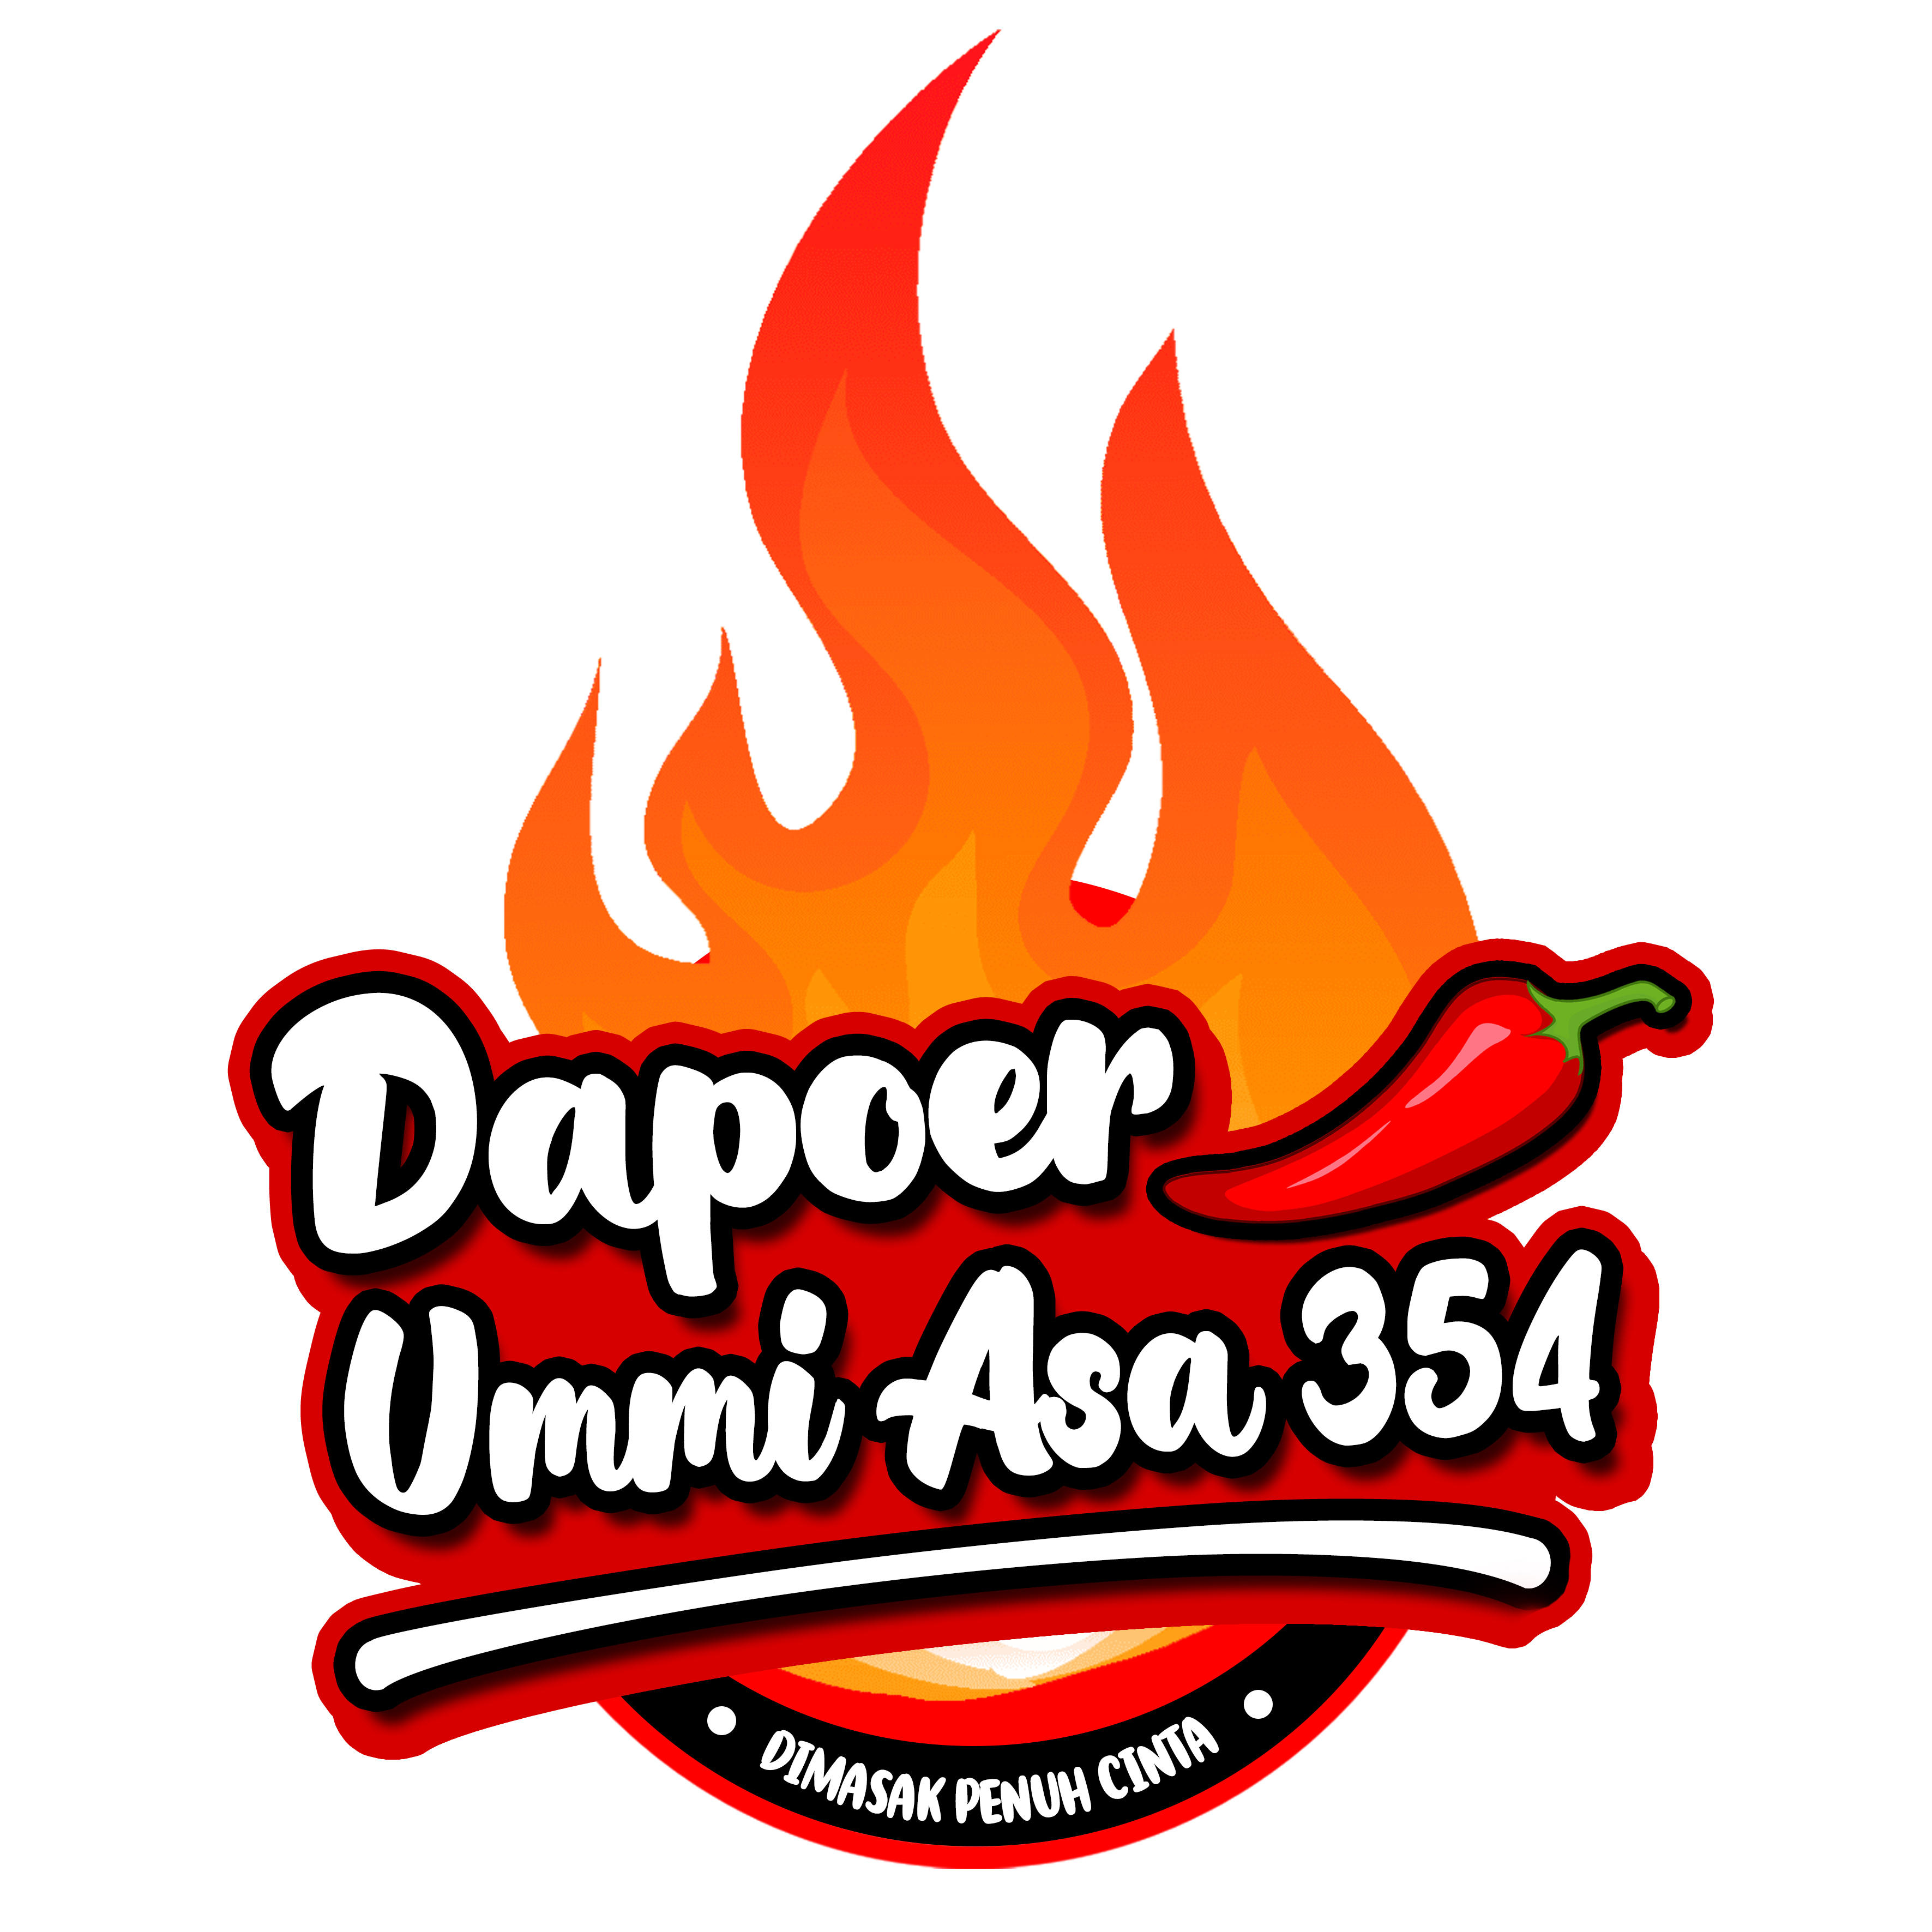 Dapoer Ummi Asa 354